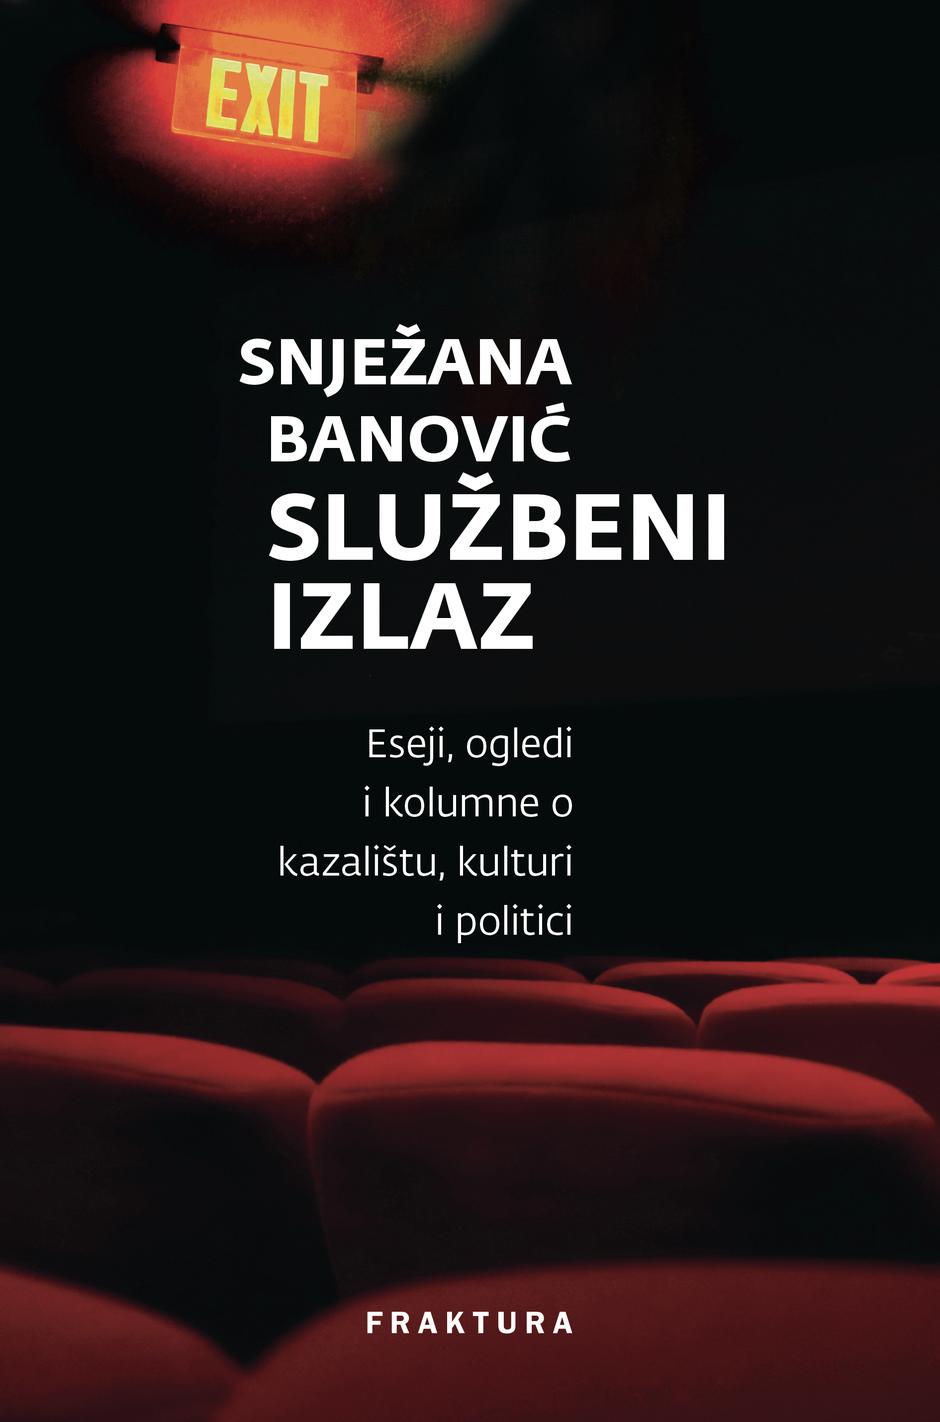 Snježana Banović | Author: Fraktura